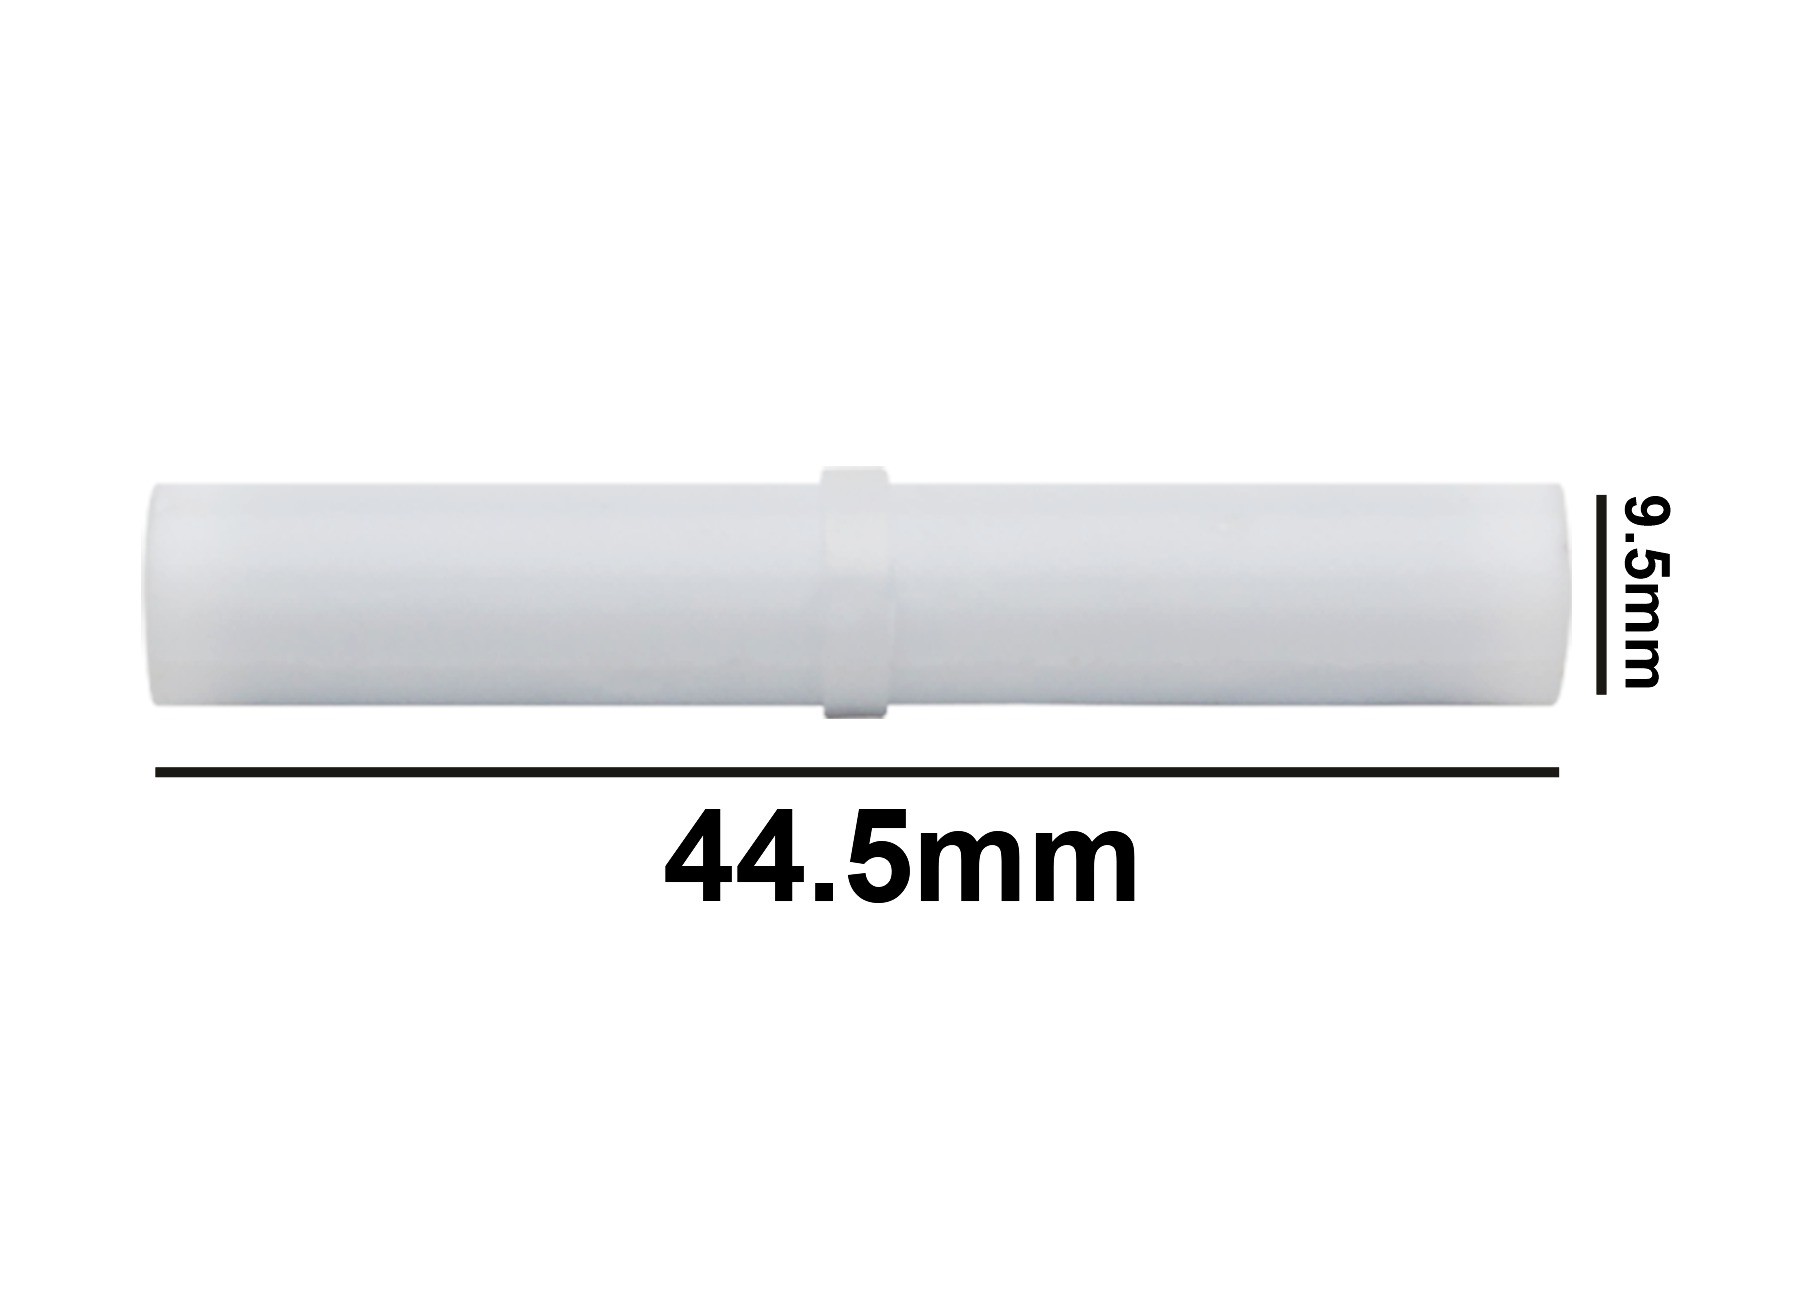 SP Bel-Art Spinbar Teflon Cylindrical Magnetic Stirring Bar; 44.5 x 9.5mm, White